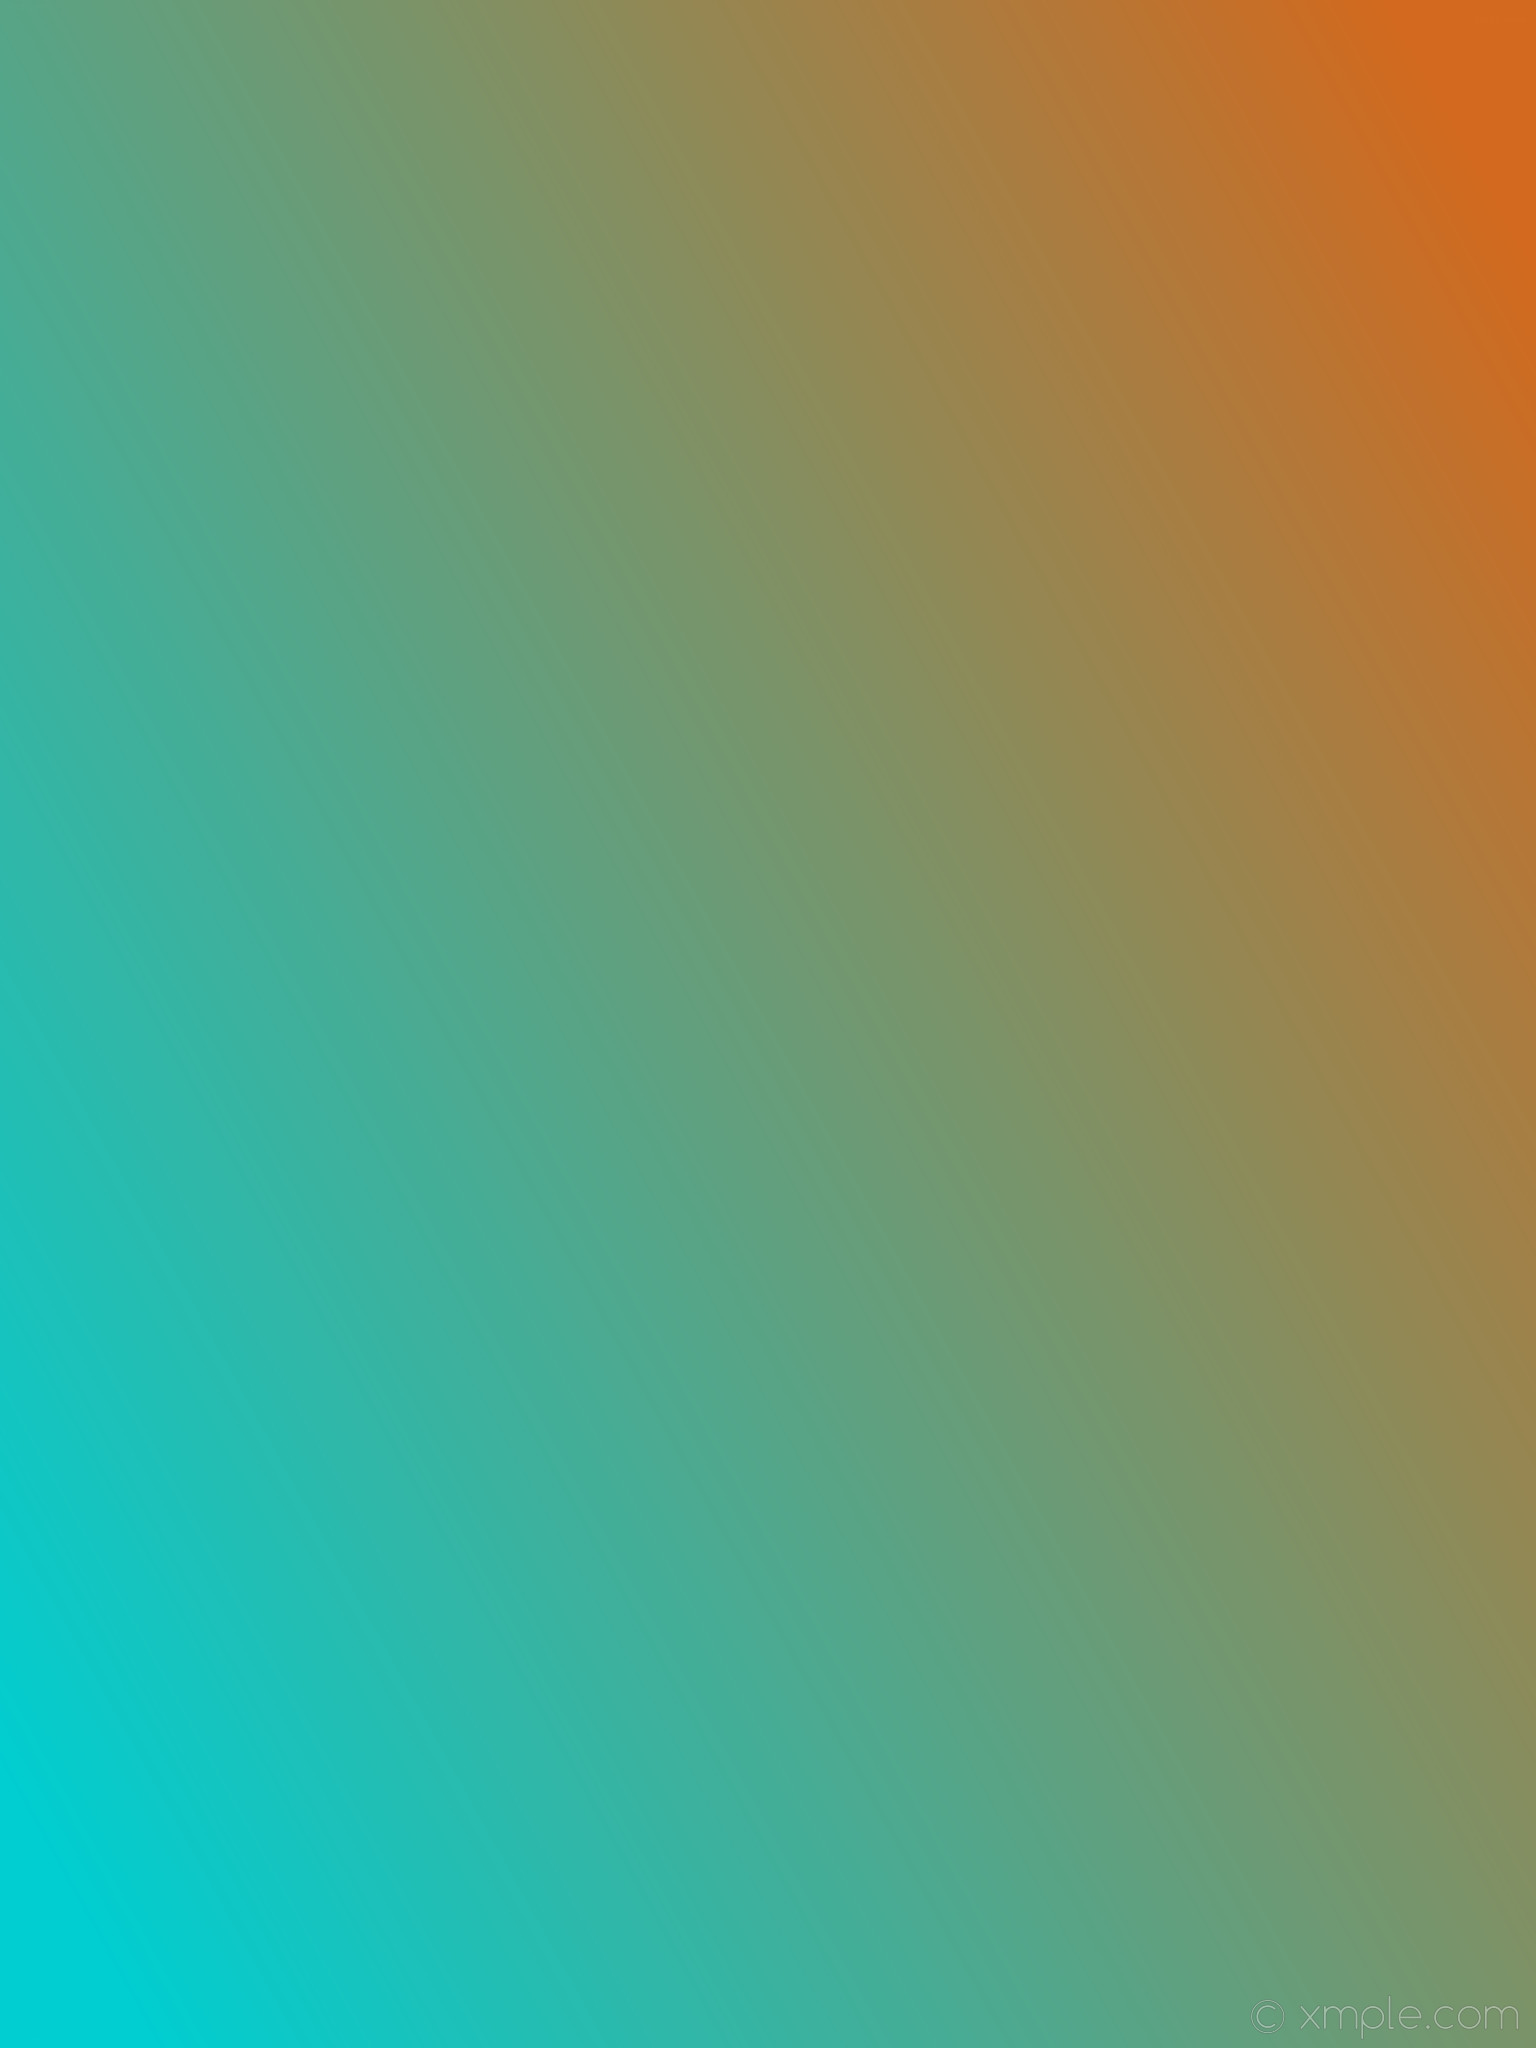 1536x2048 wallpaper gradient linear brown blue dark turquoise chocolate #00ced1  #d2691e 225Â°